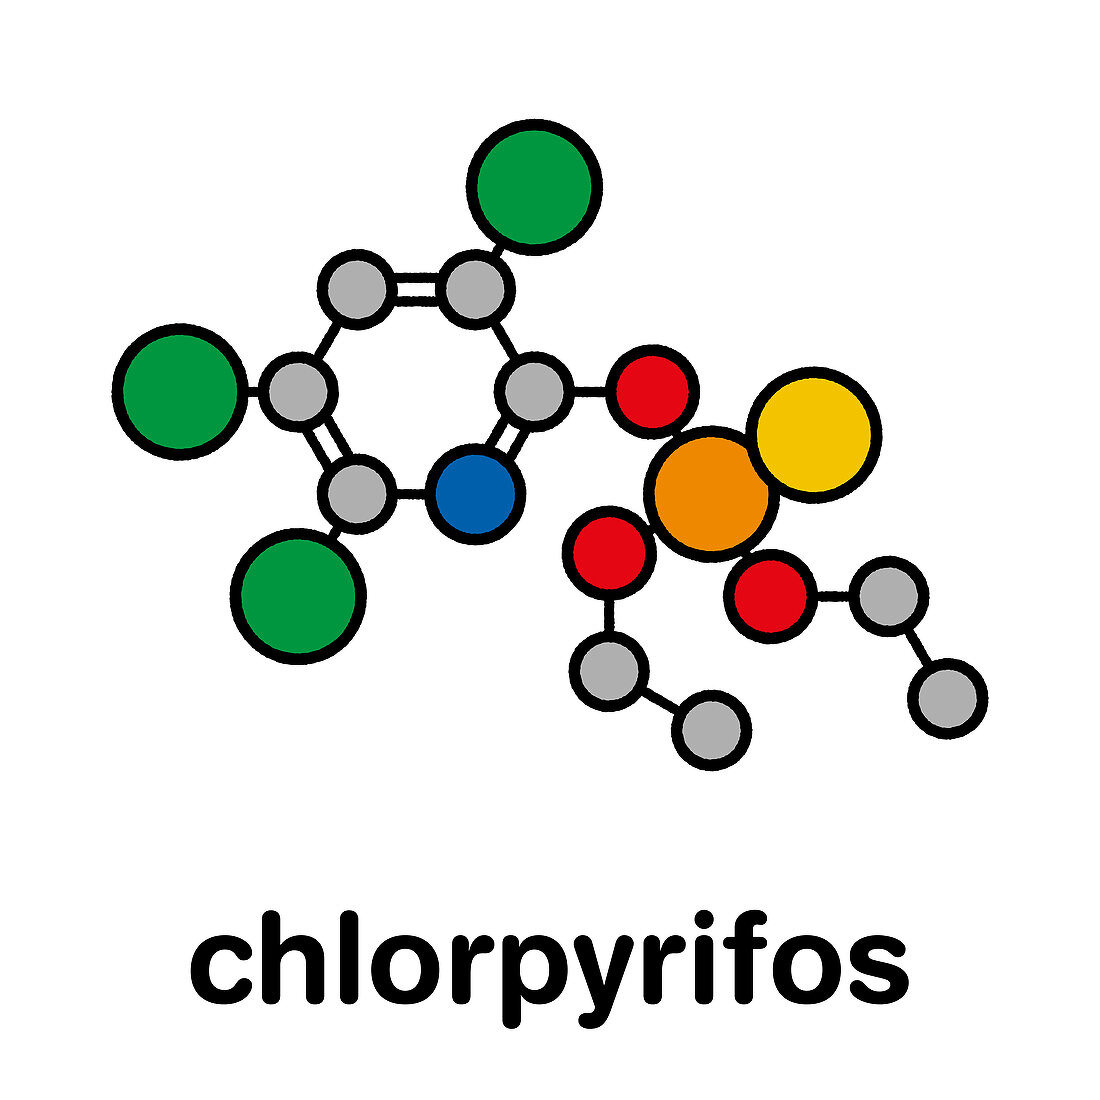 Chlorpyrifos pesticide molecule, illustration